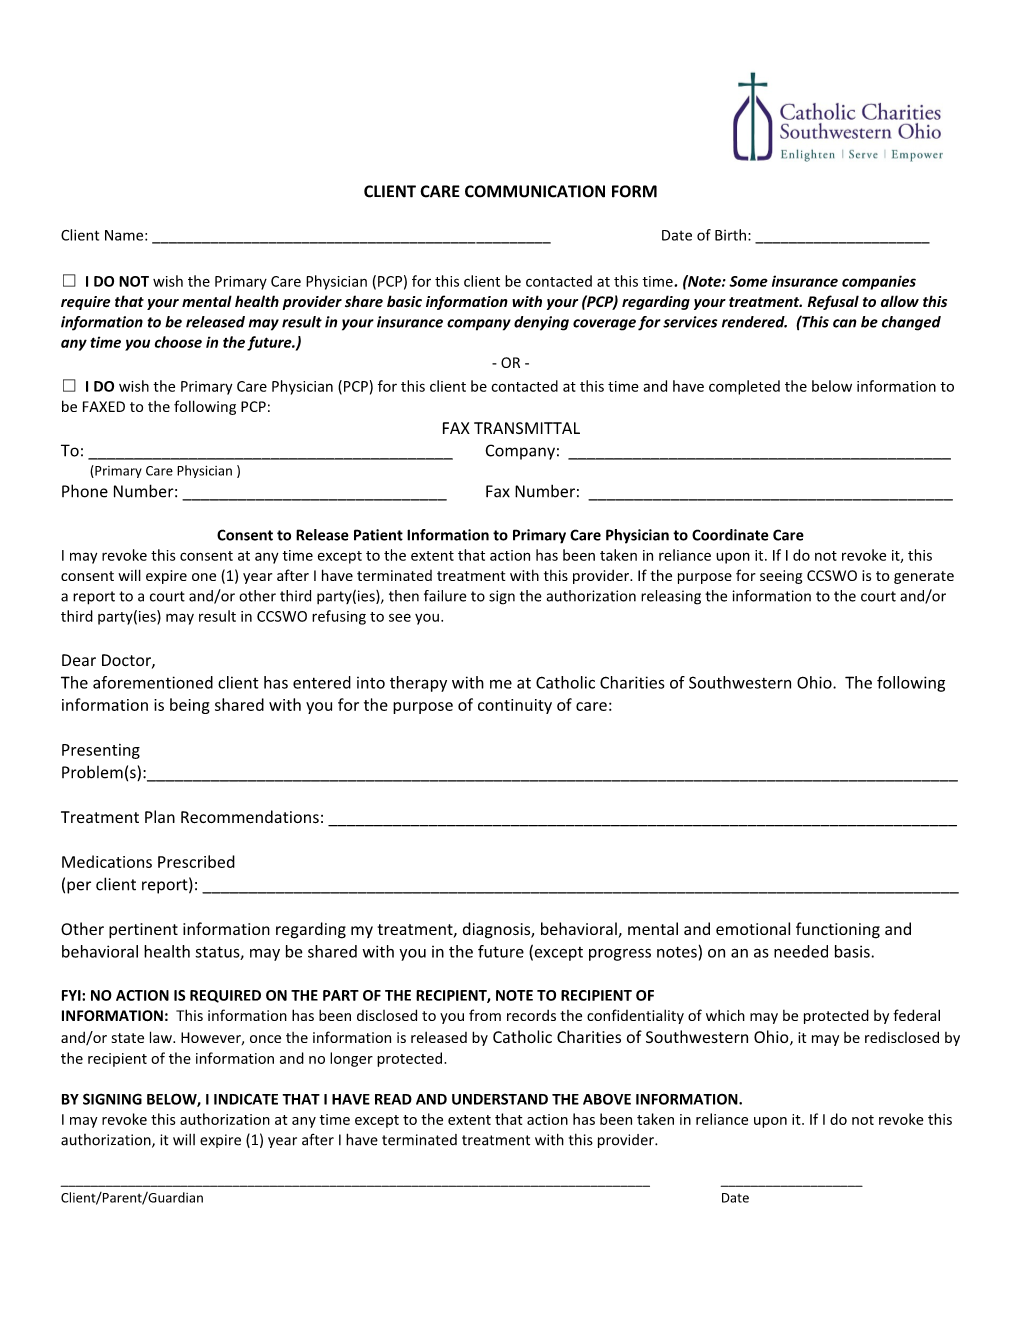 Employee Corrective Action Form